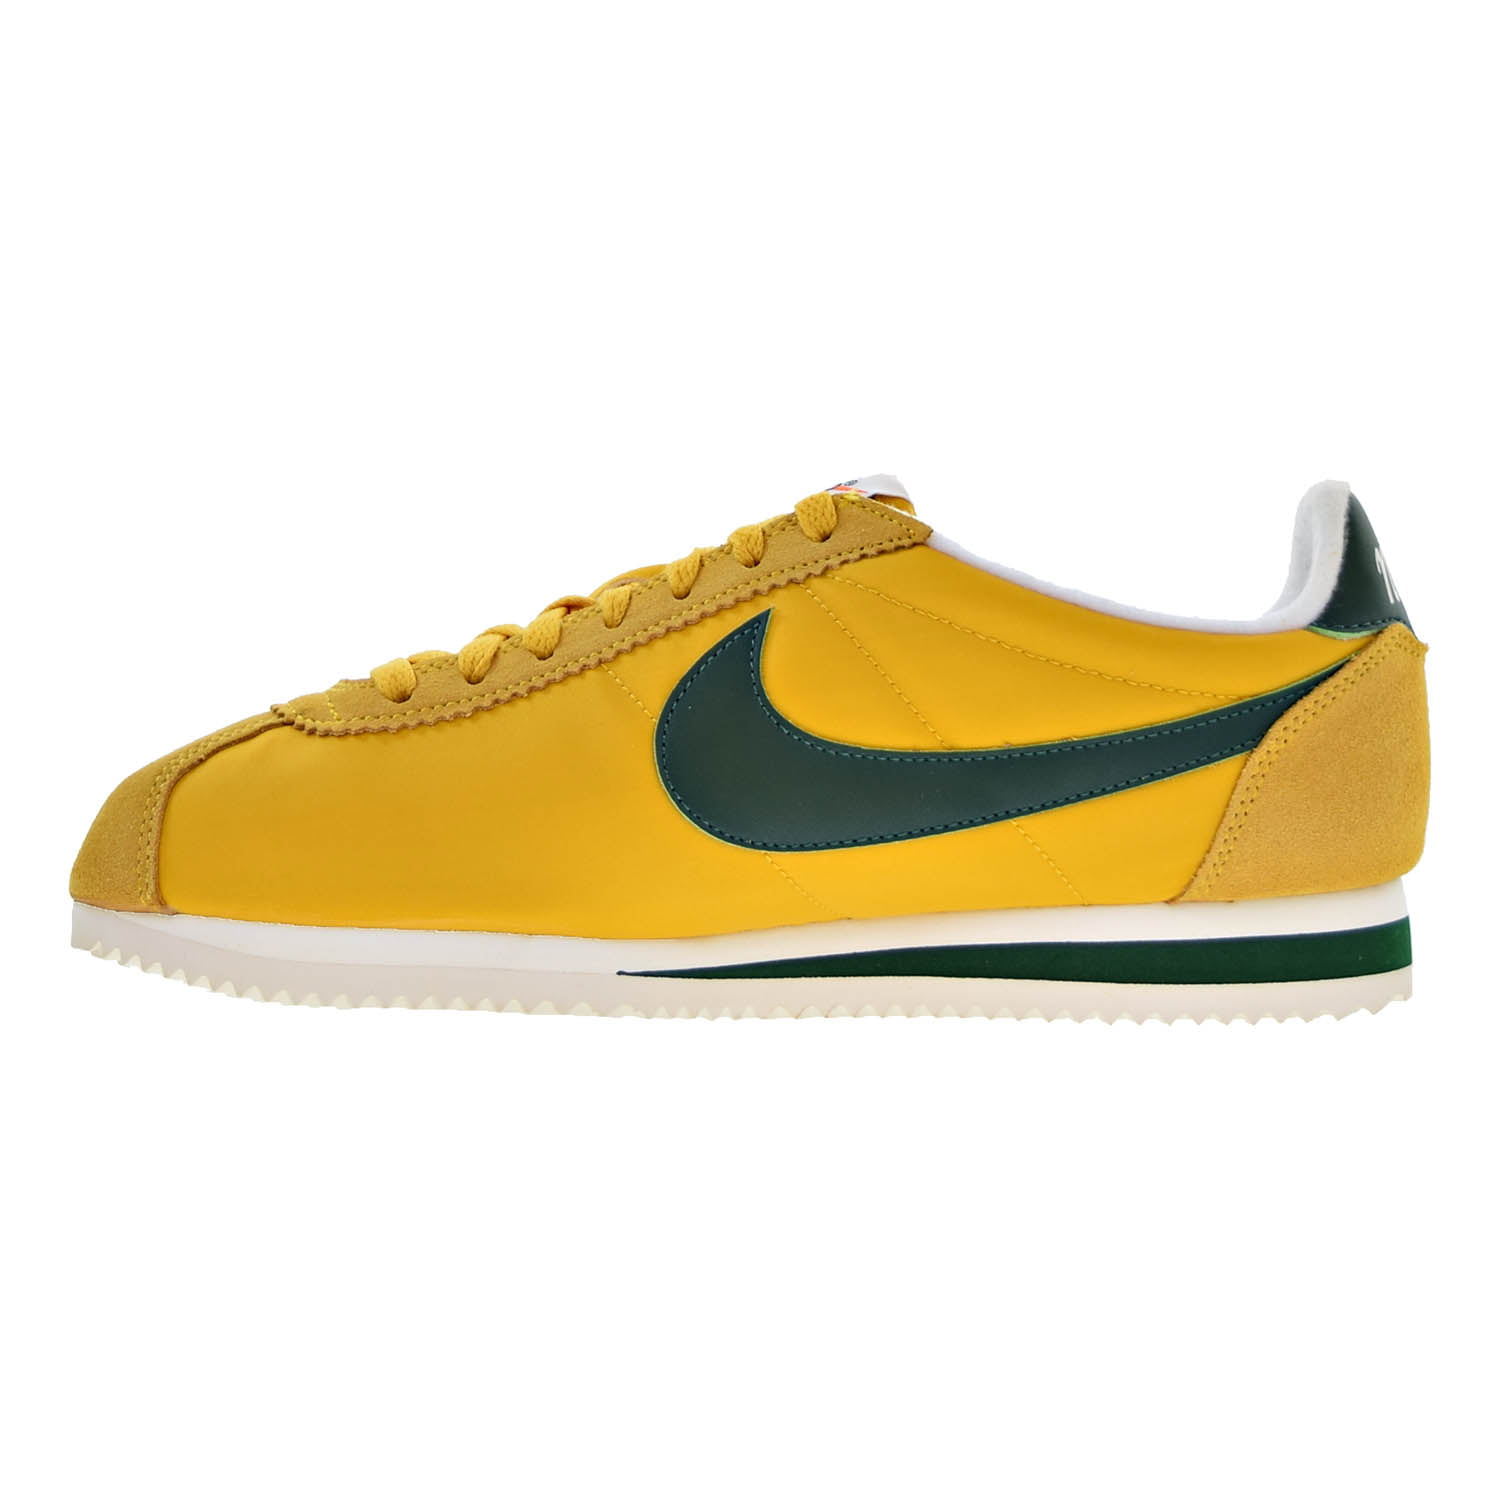 rifle Significado antena Nike Classic Cortez Nylon Premium Men's Shoes Yellow Ochre/Sail/Gorge Green  876873-700 - Walmart.com